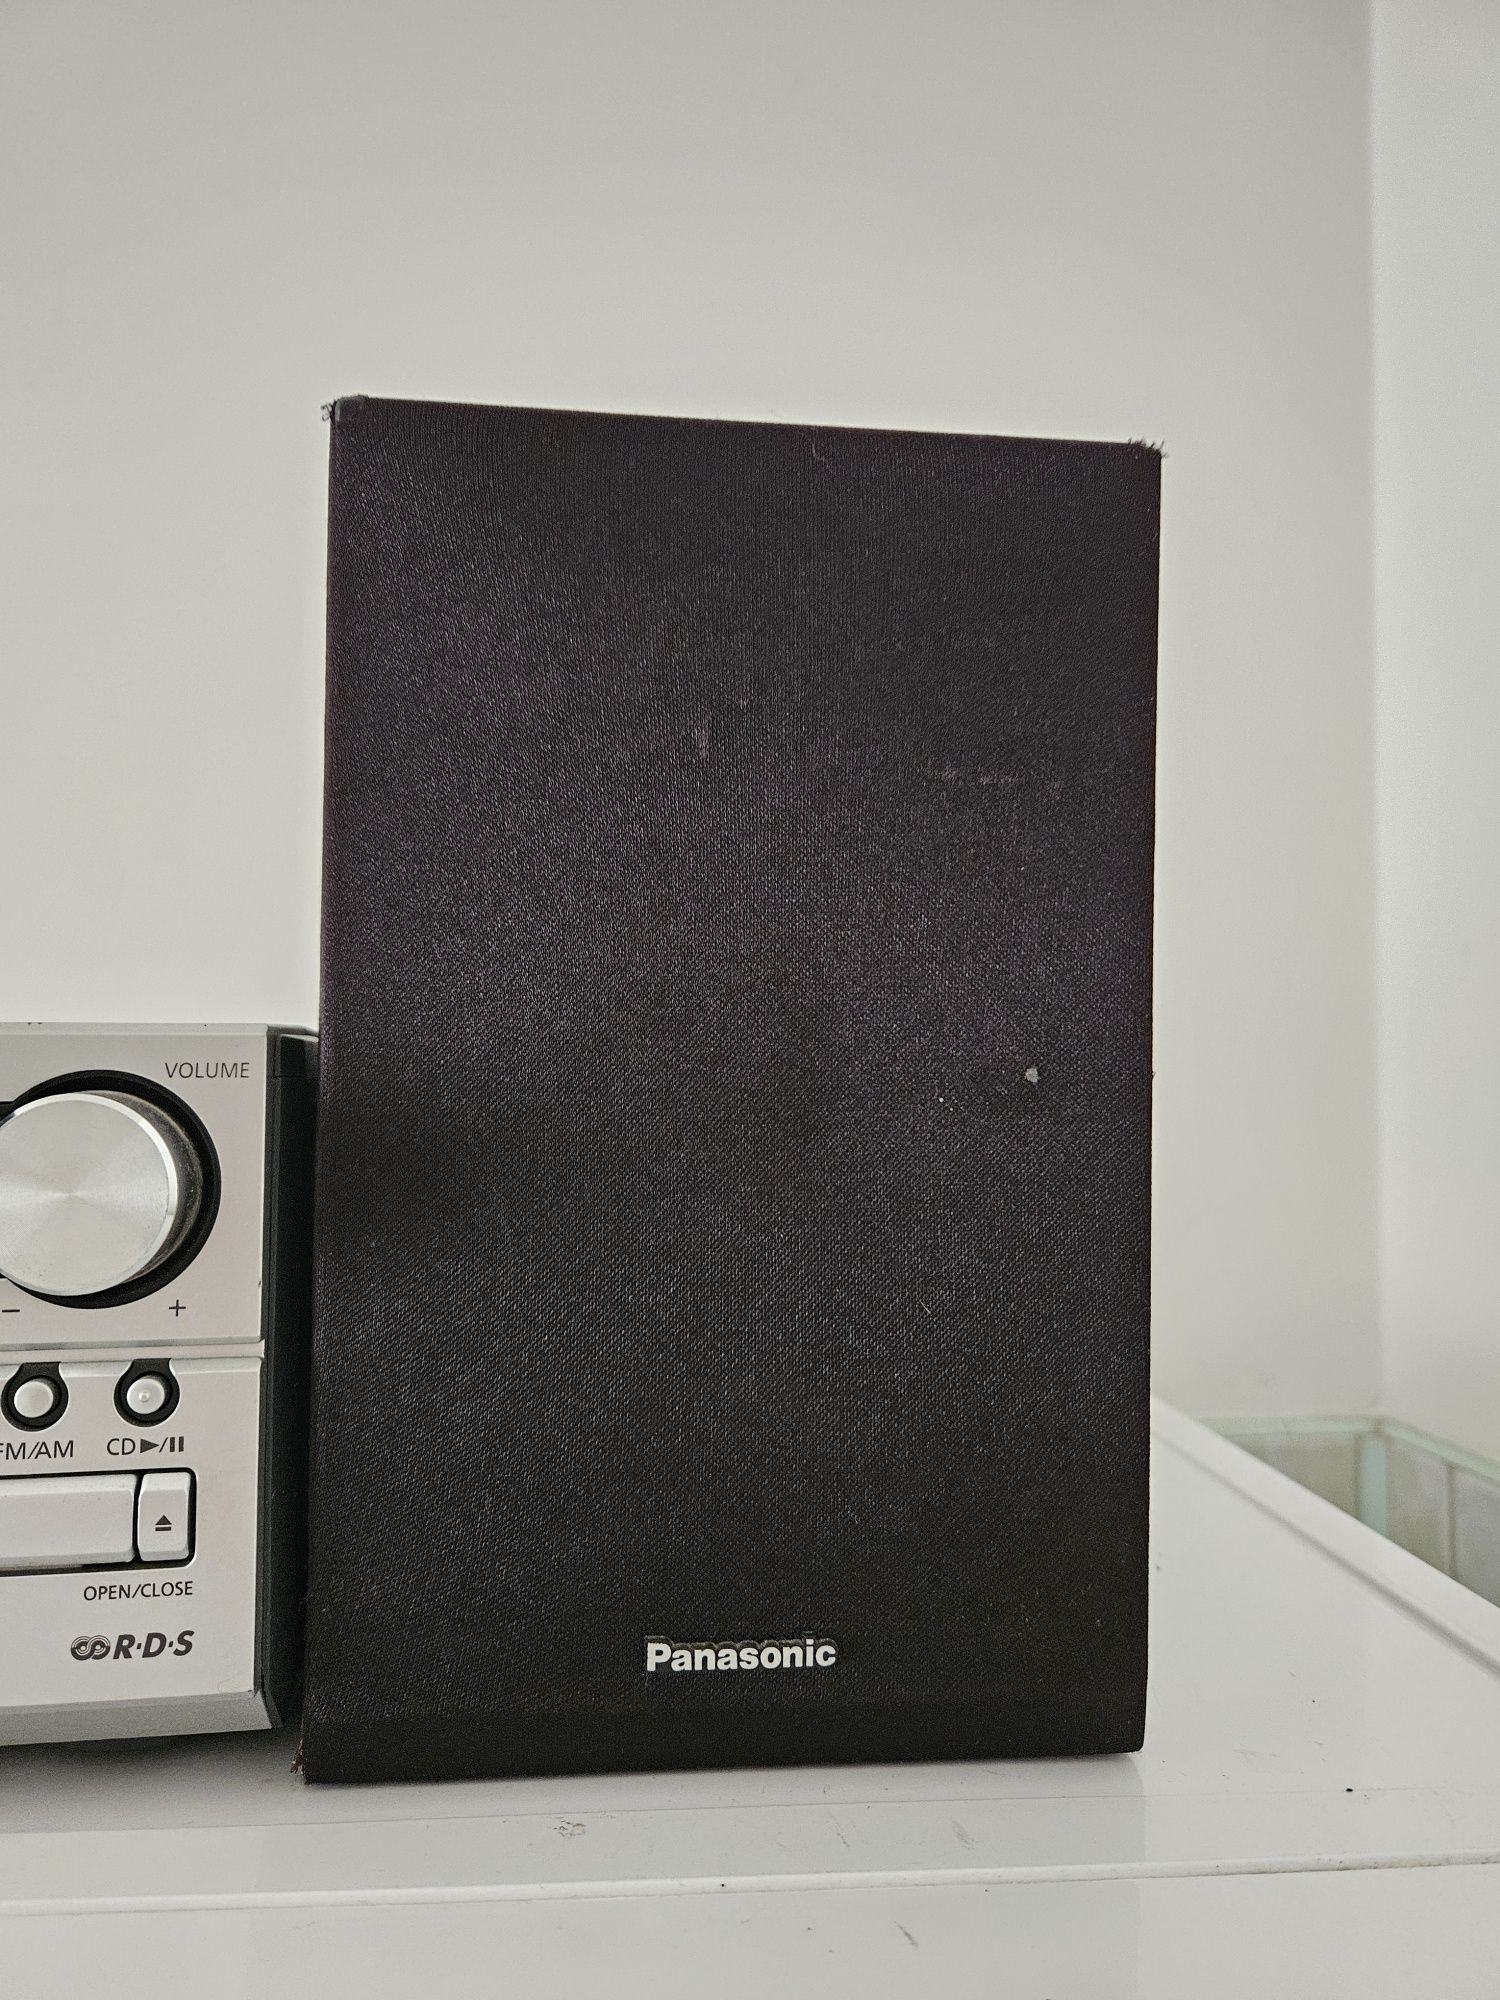 Panasonic mikro i mini wieża